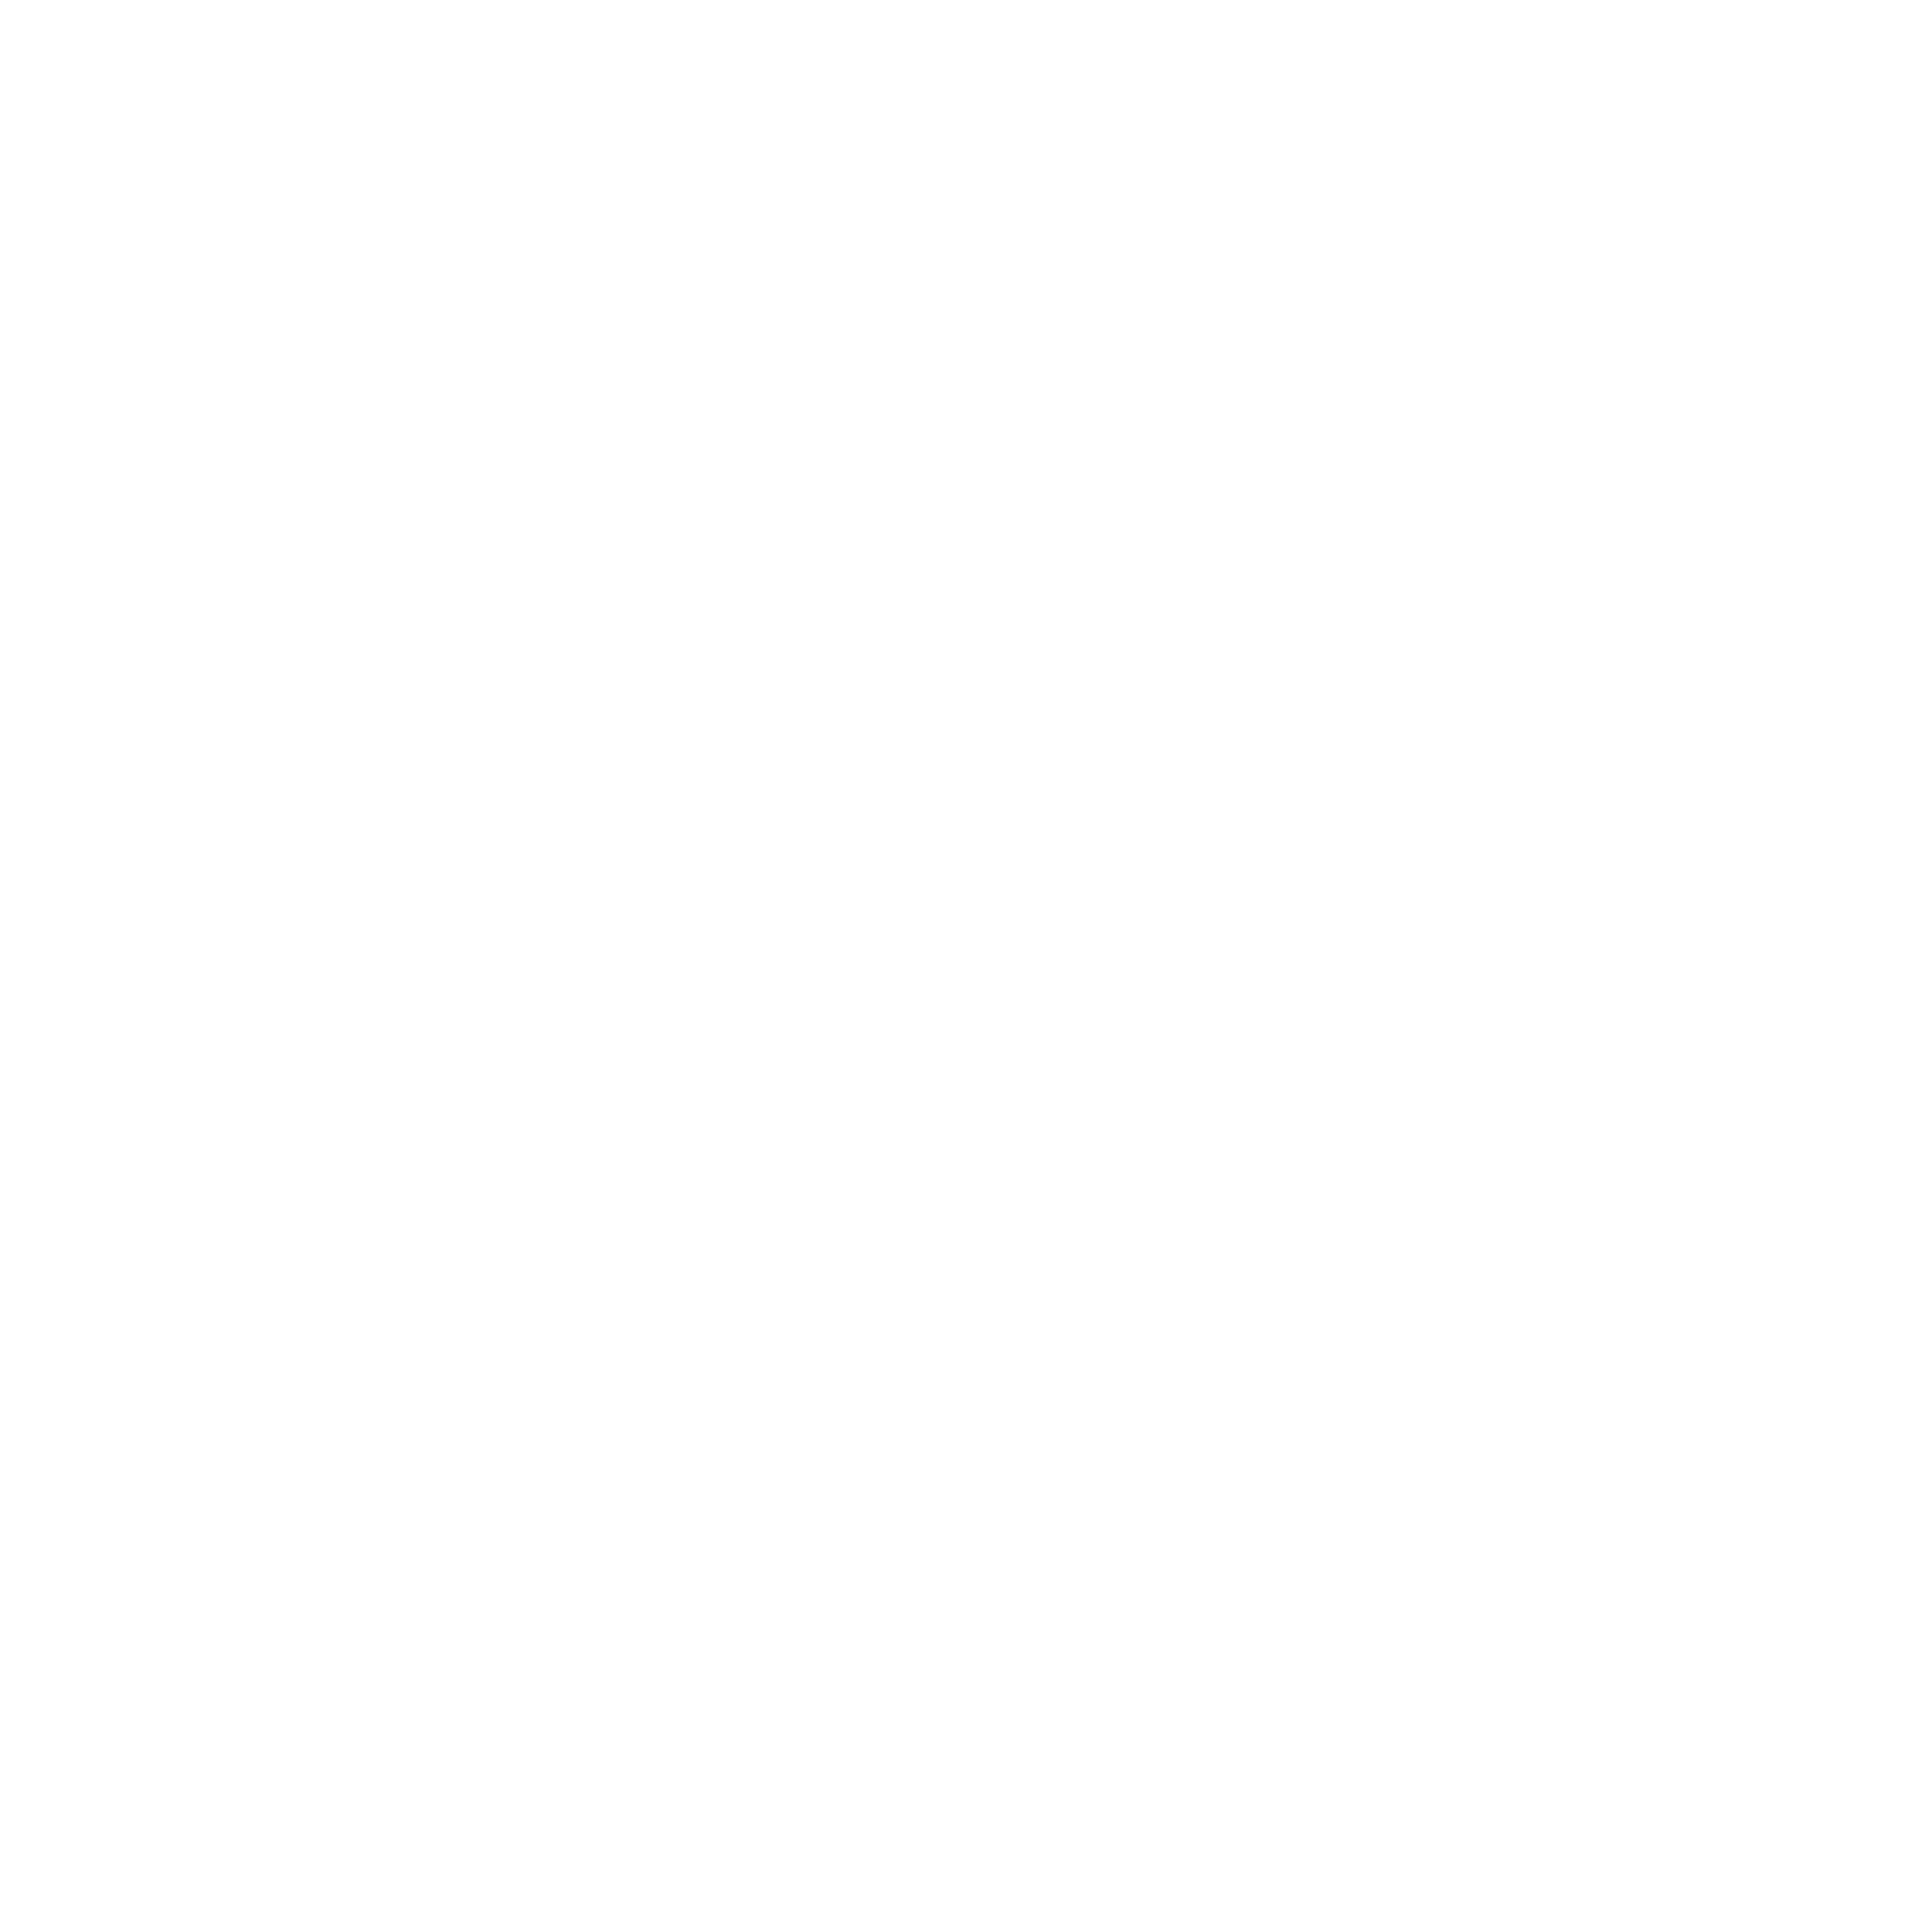 Lions Grind